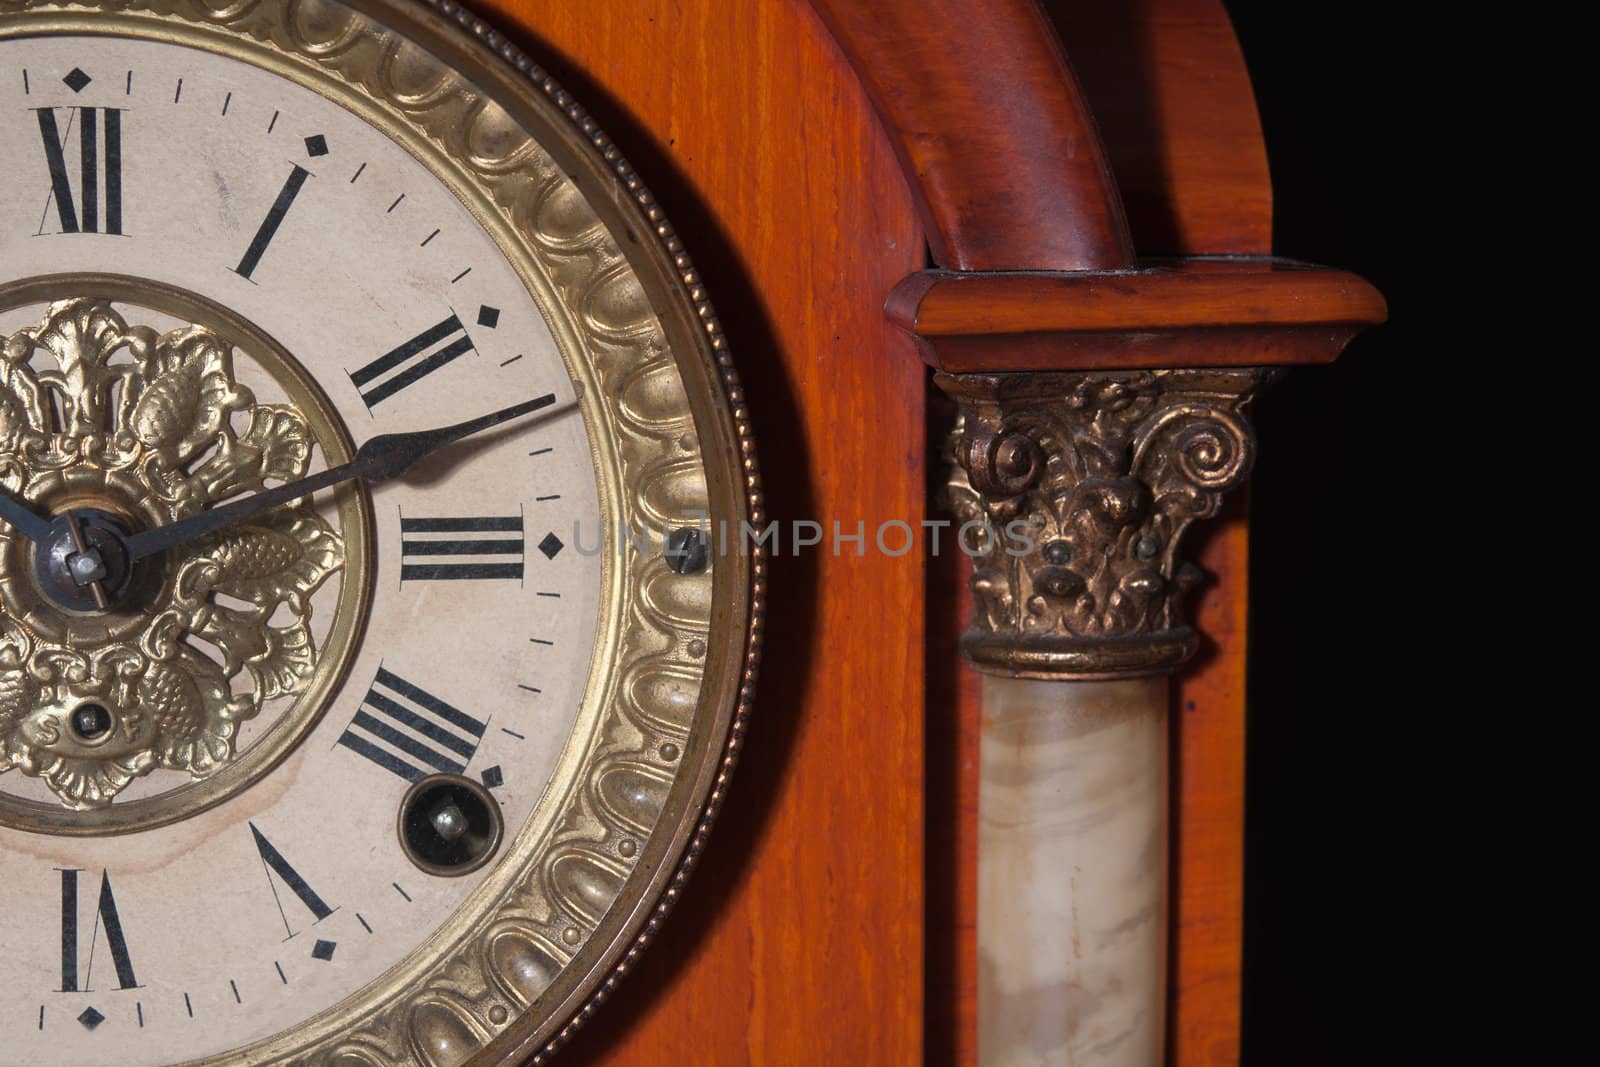 antique clock close up on black background